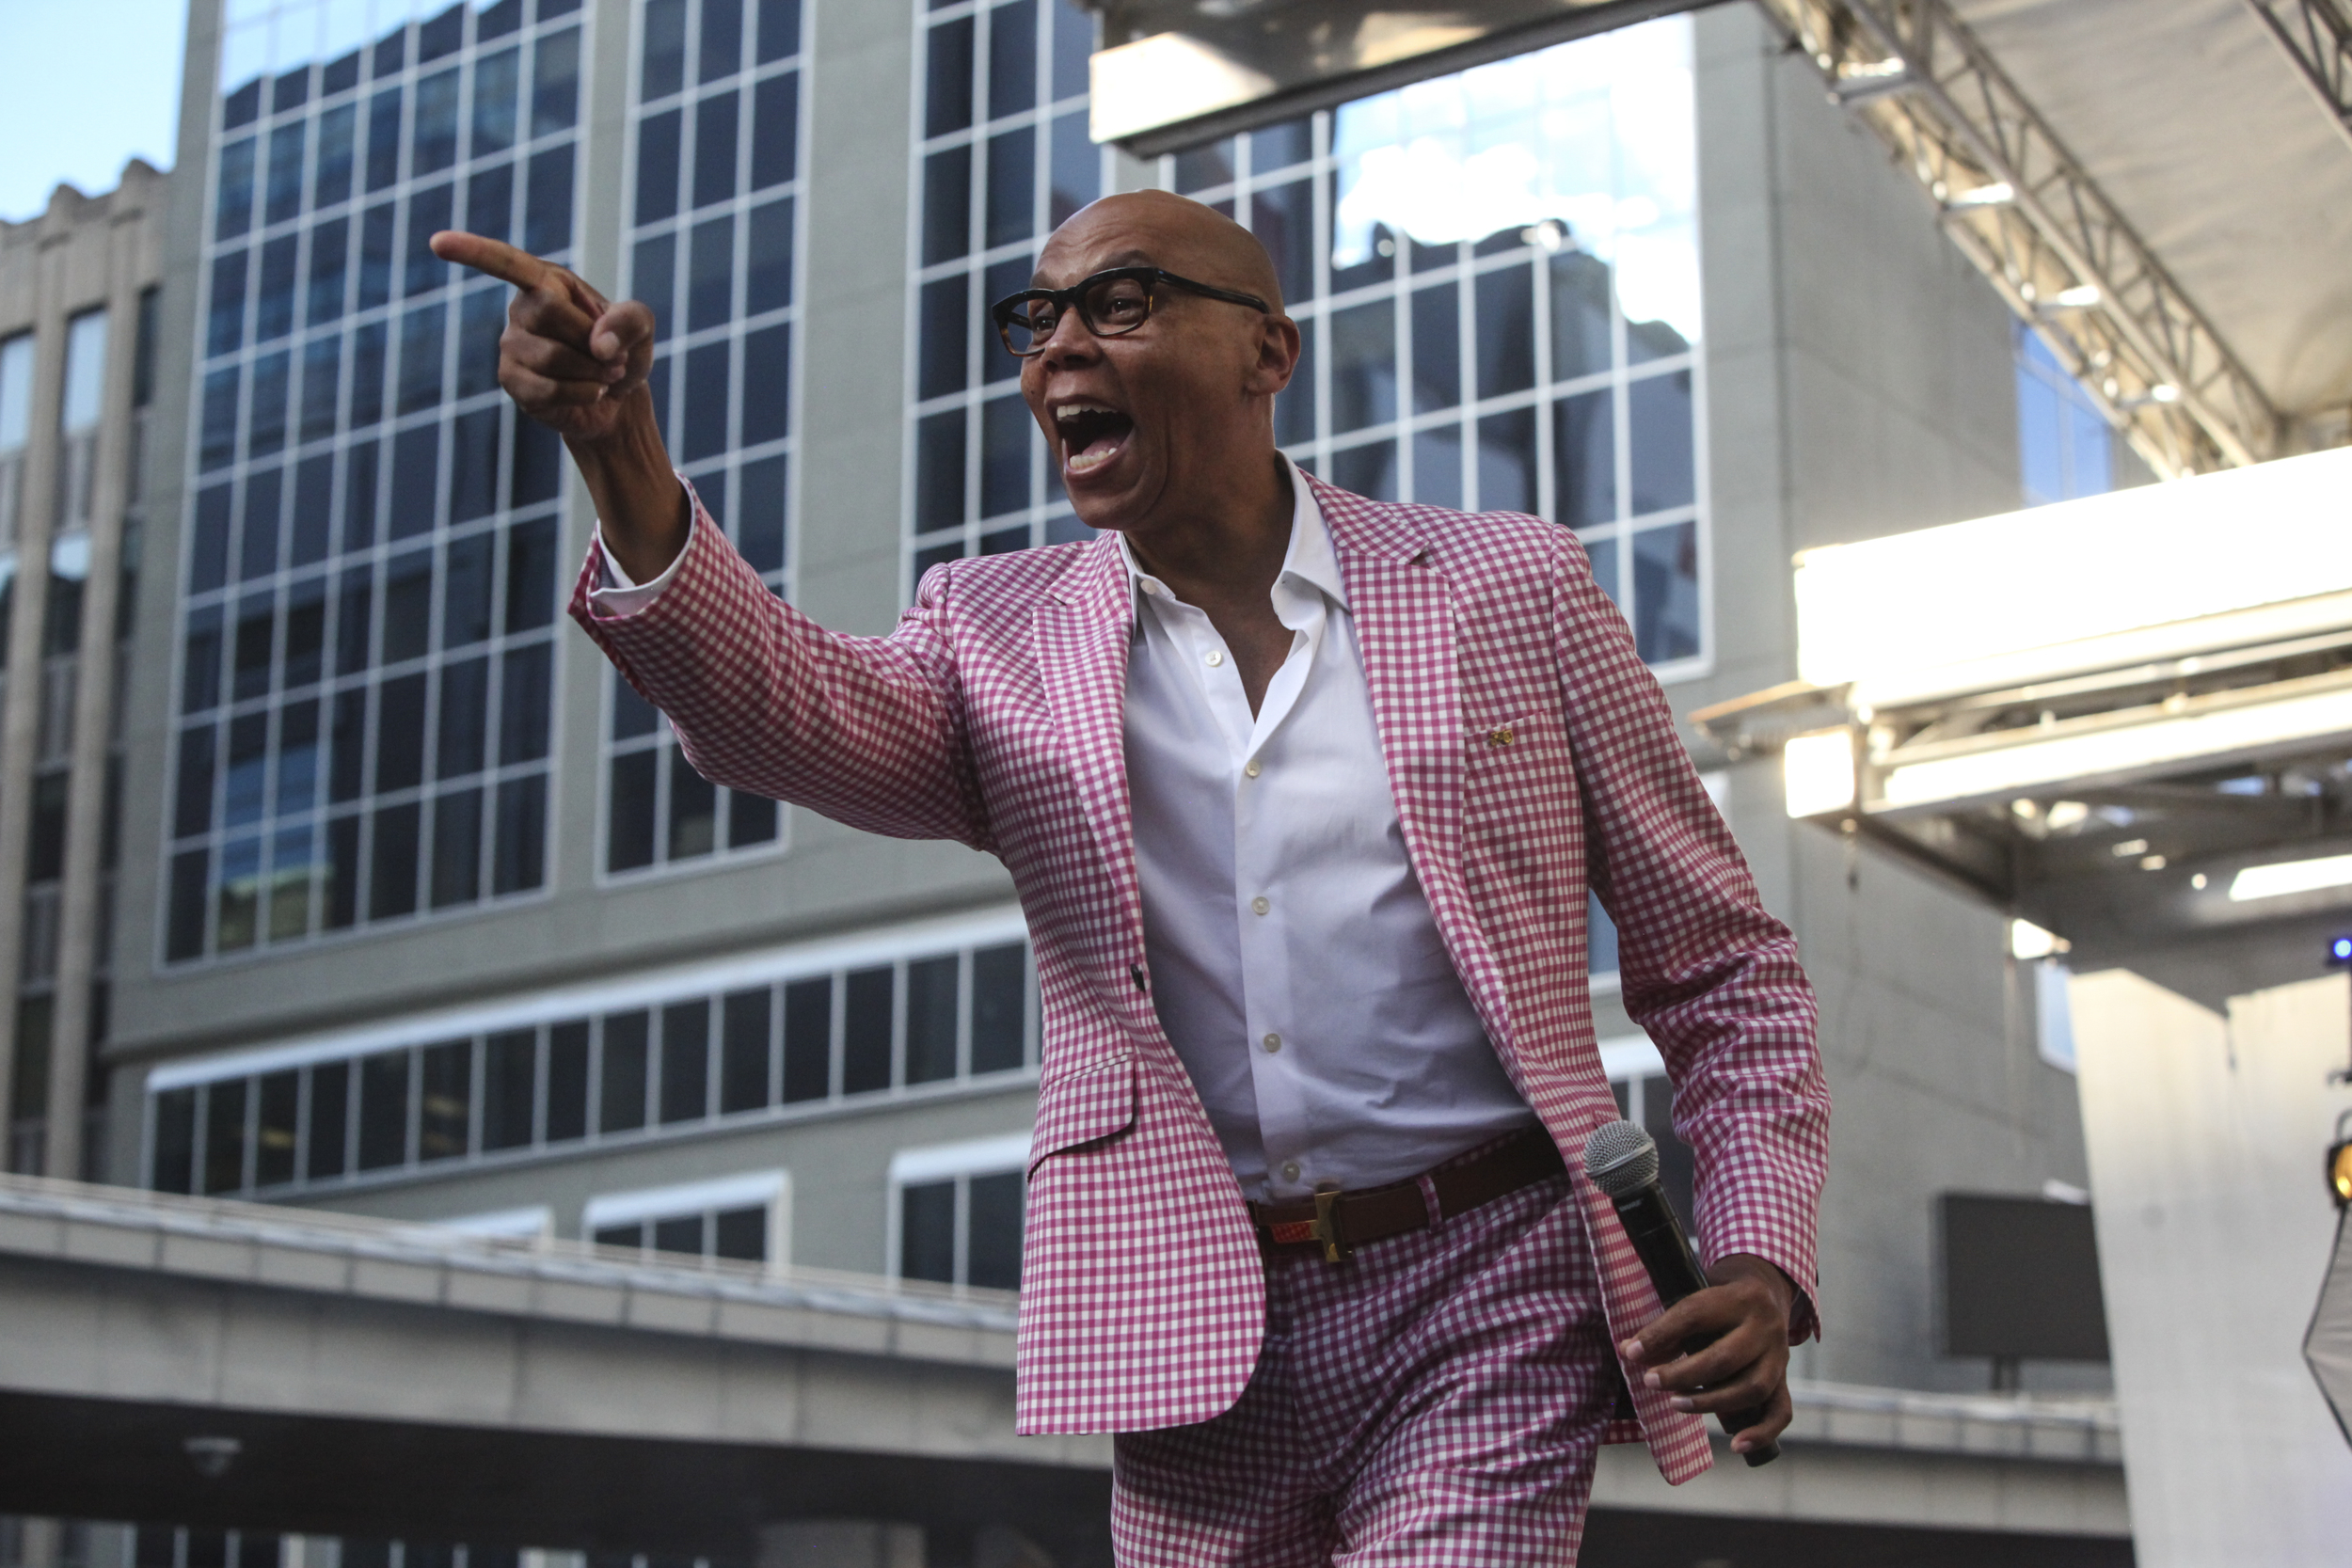 RuPaul Charles speaking at Toronto Pride 2016 in Yonge-Dundas Square